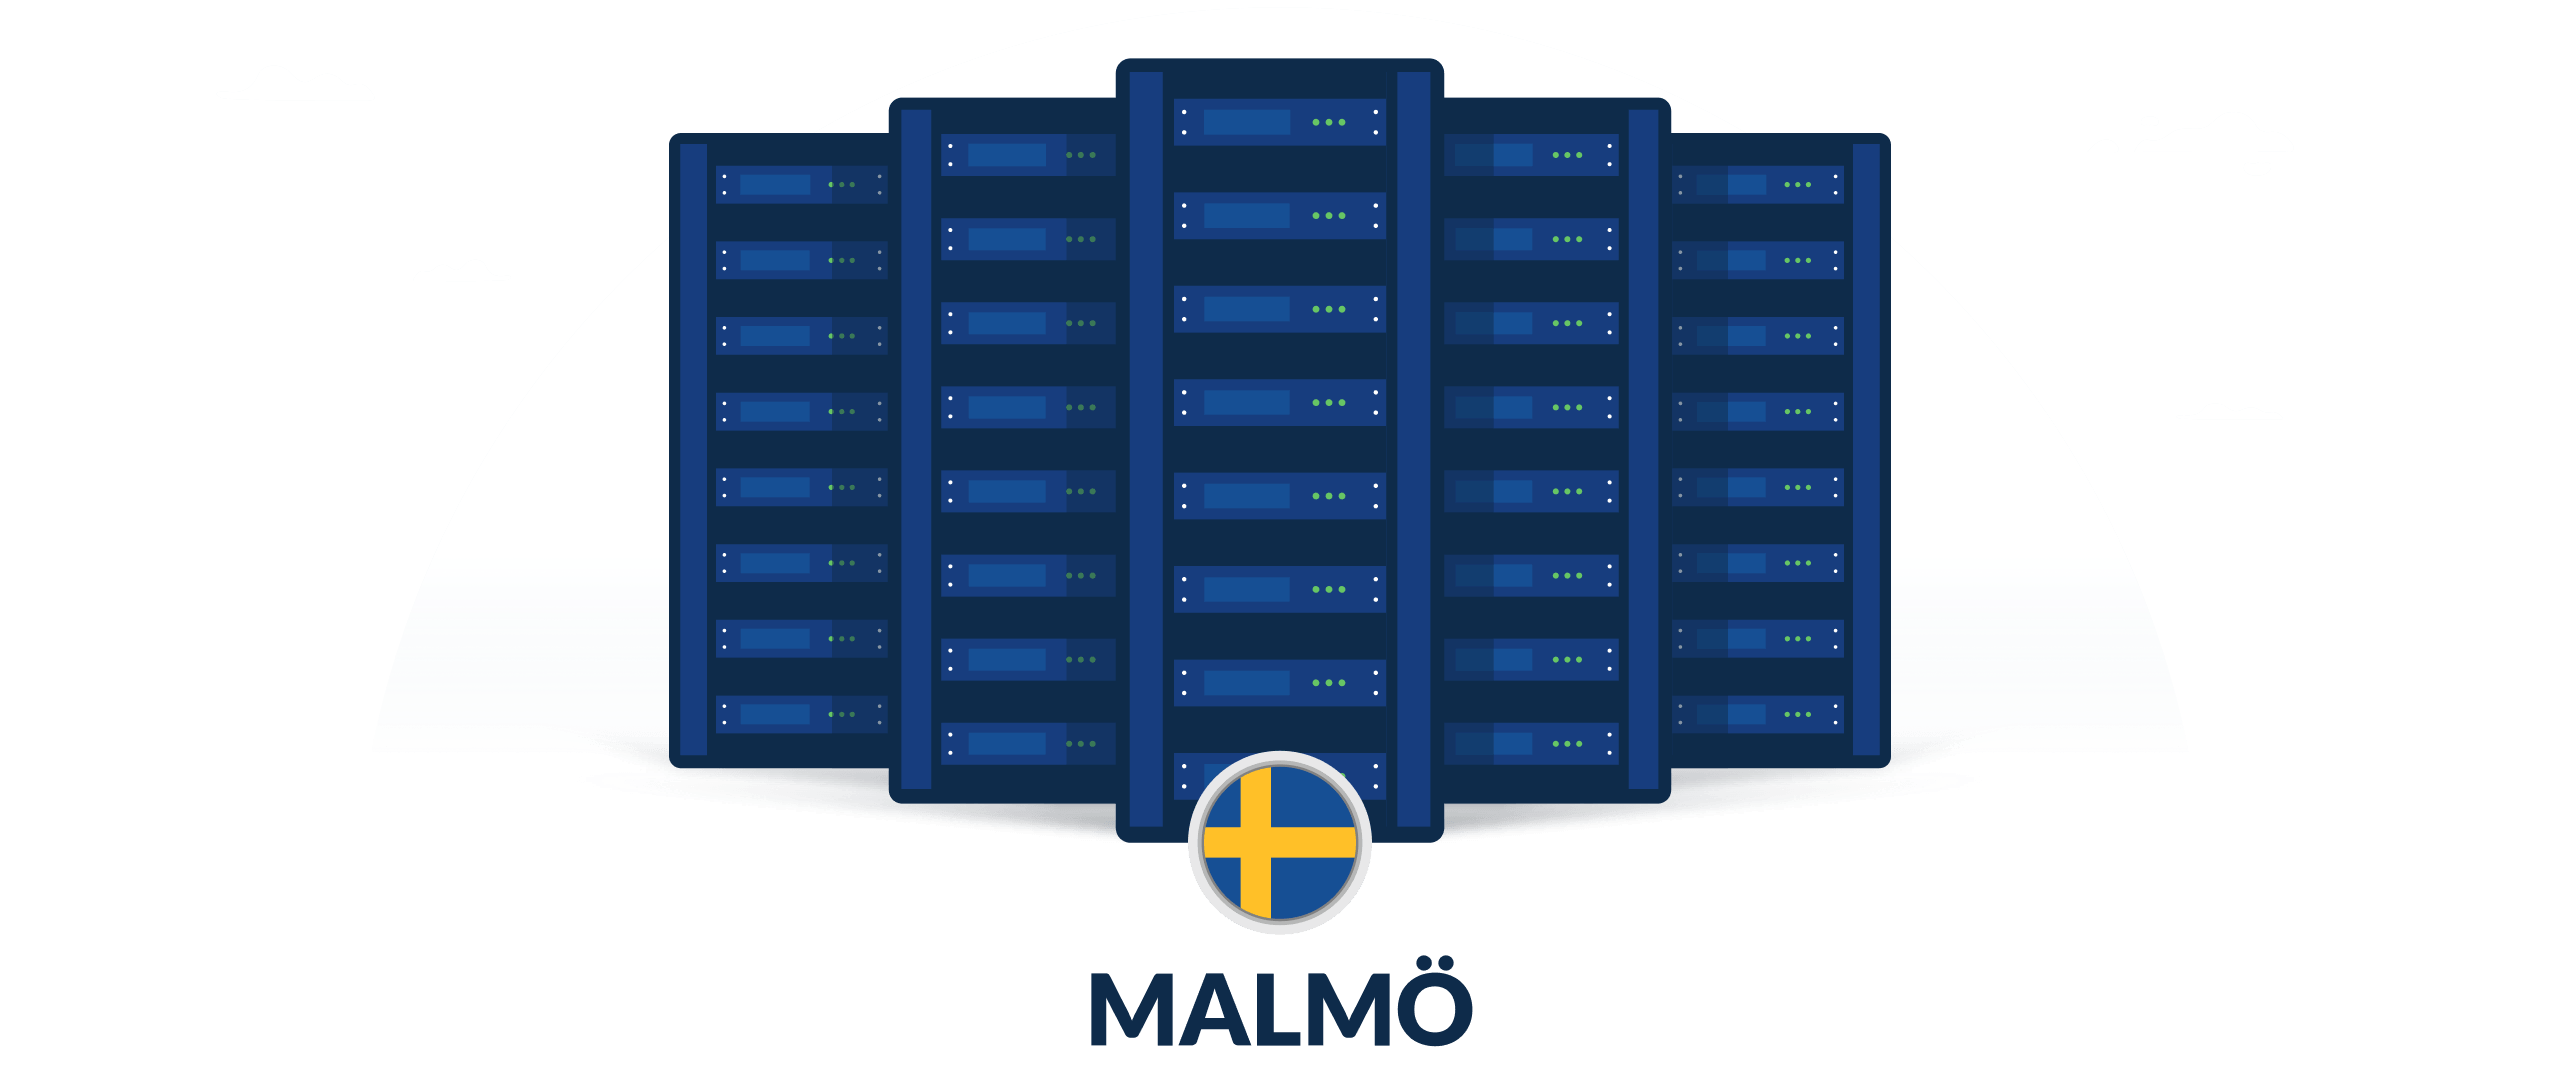 VPN servers in Malmö, Sweden